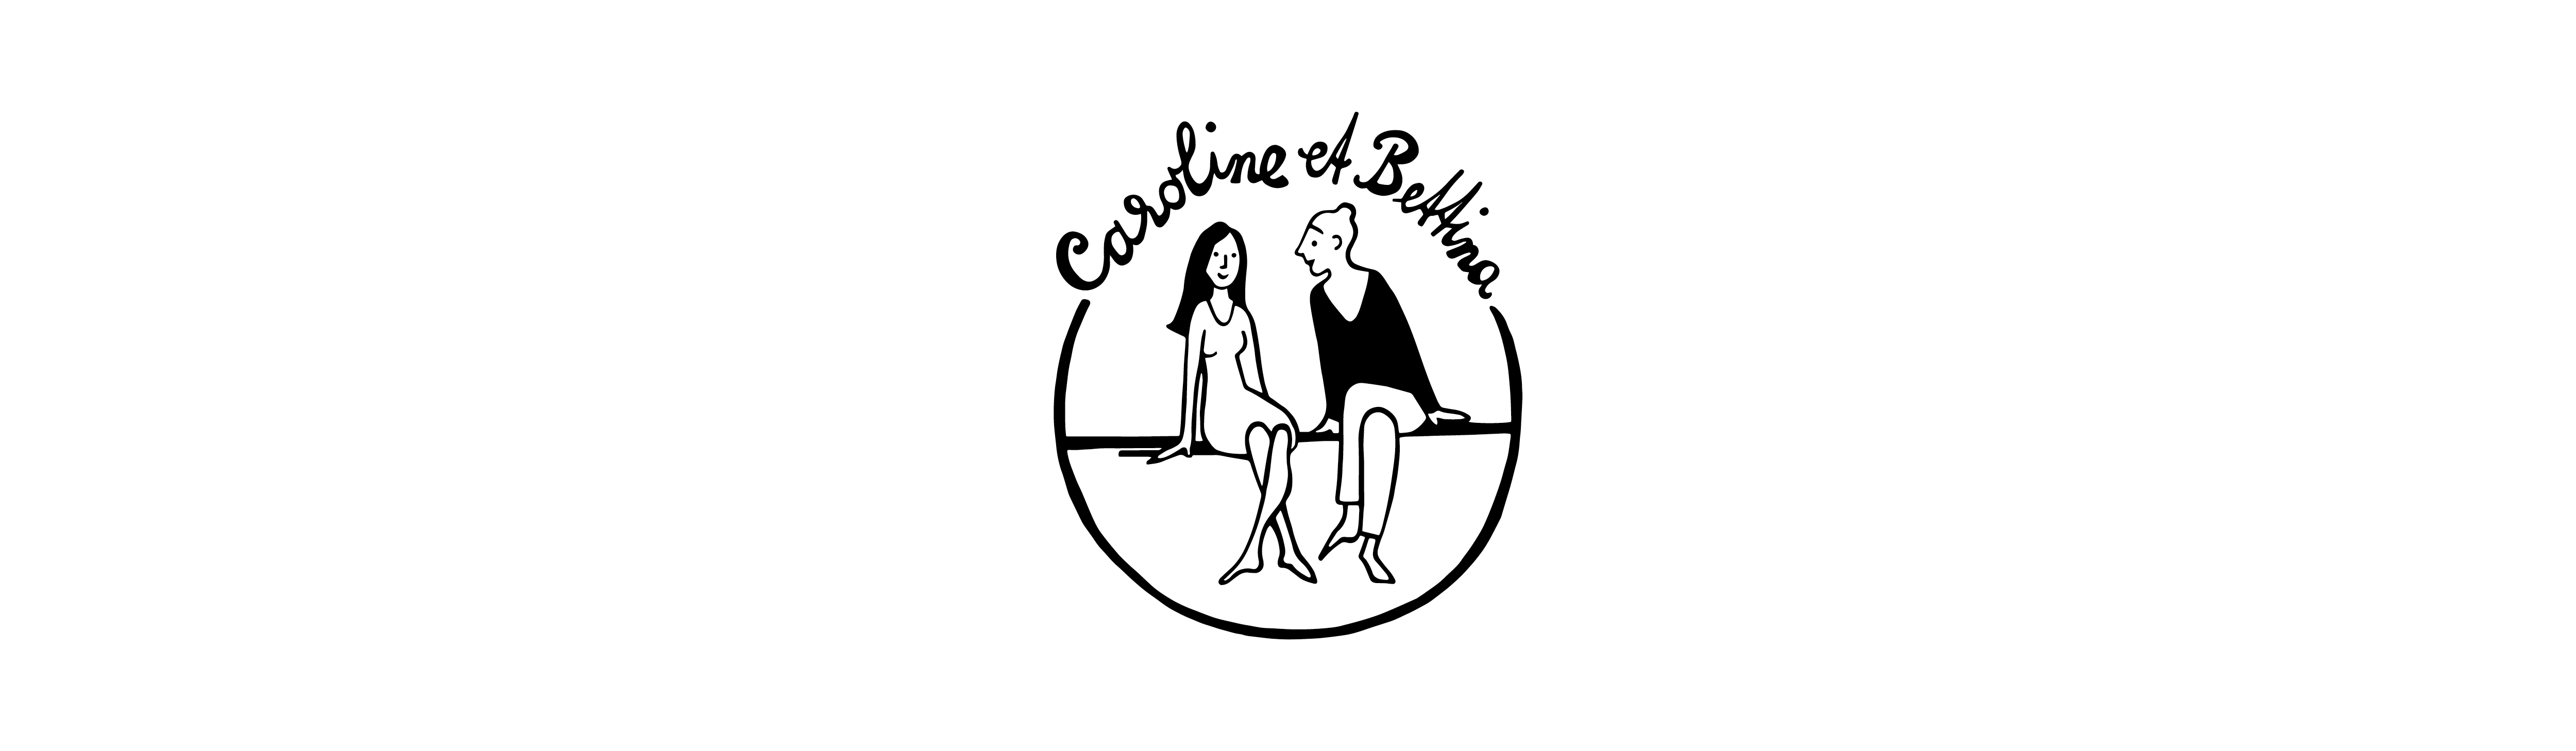 Caroline et Bettina Logo